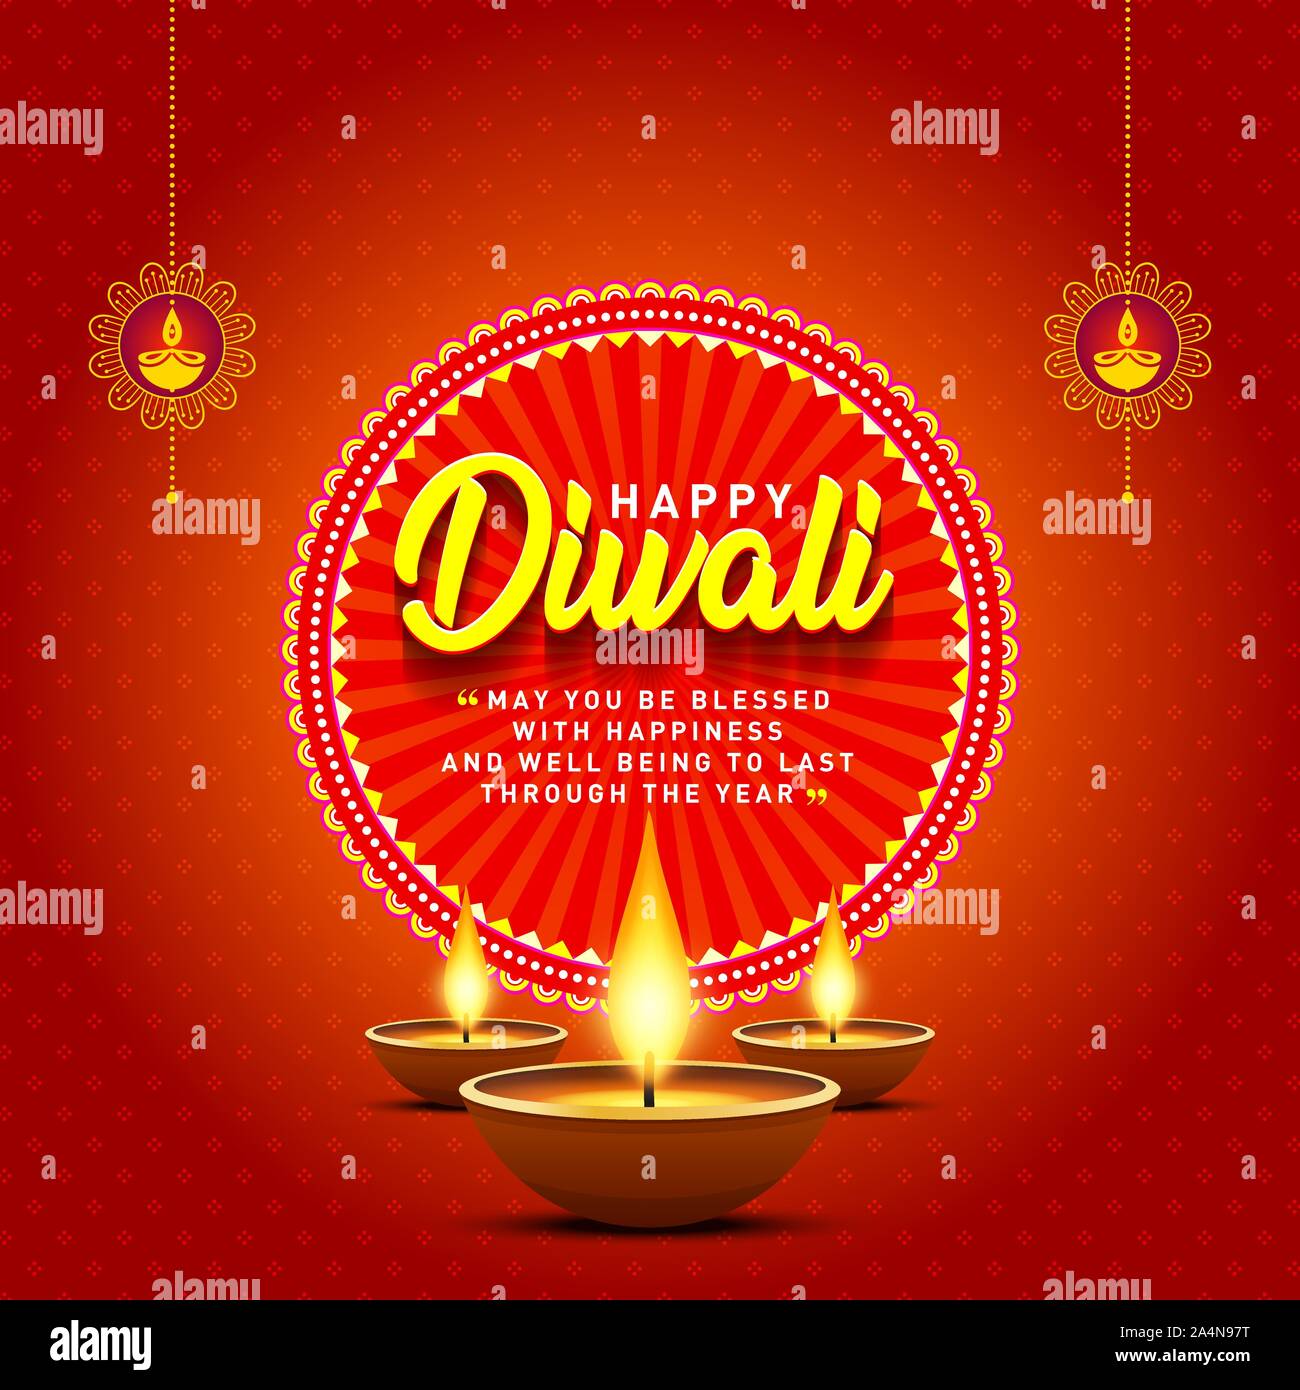 Customizable Happy Diwali video template